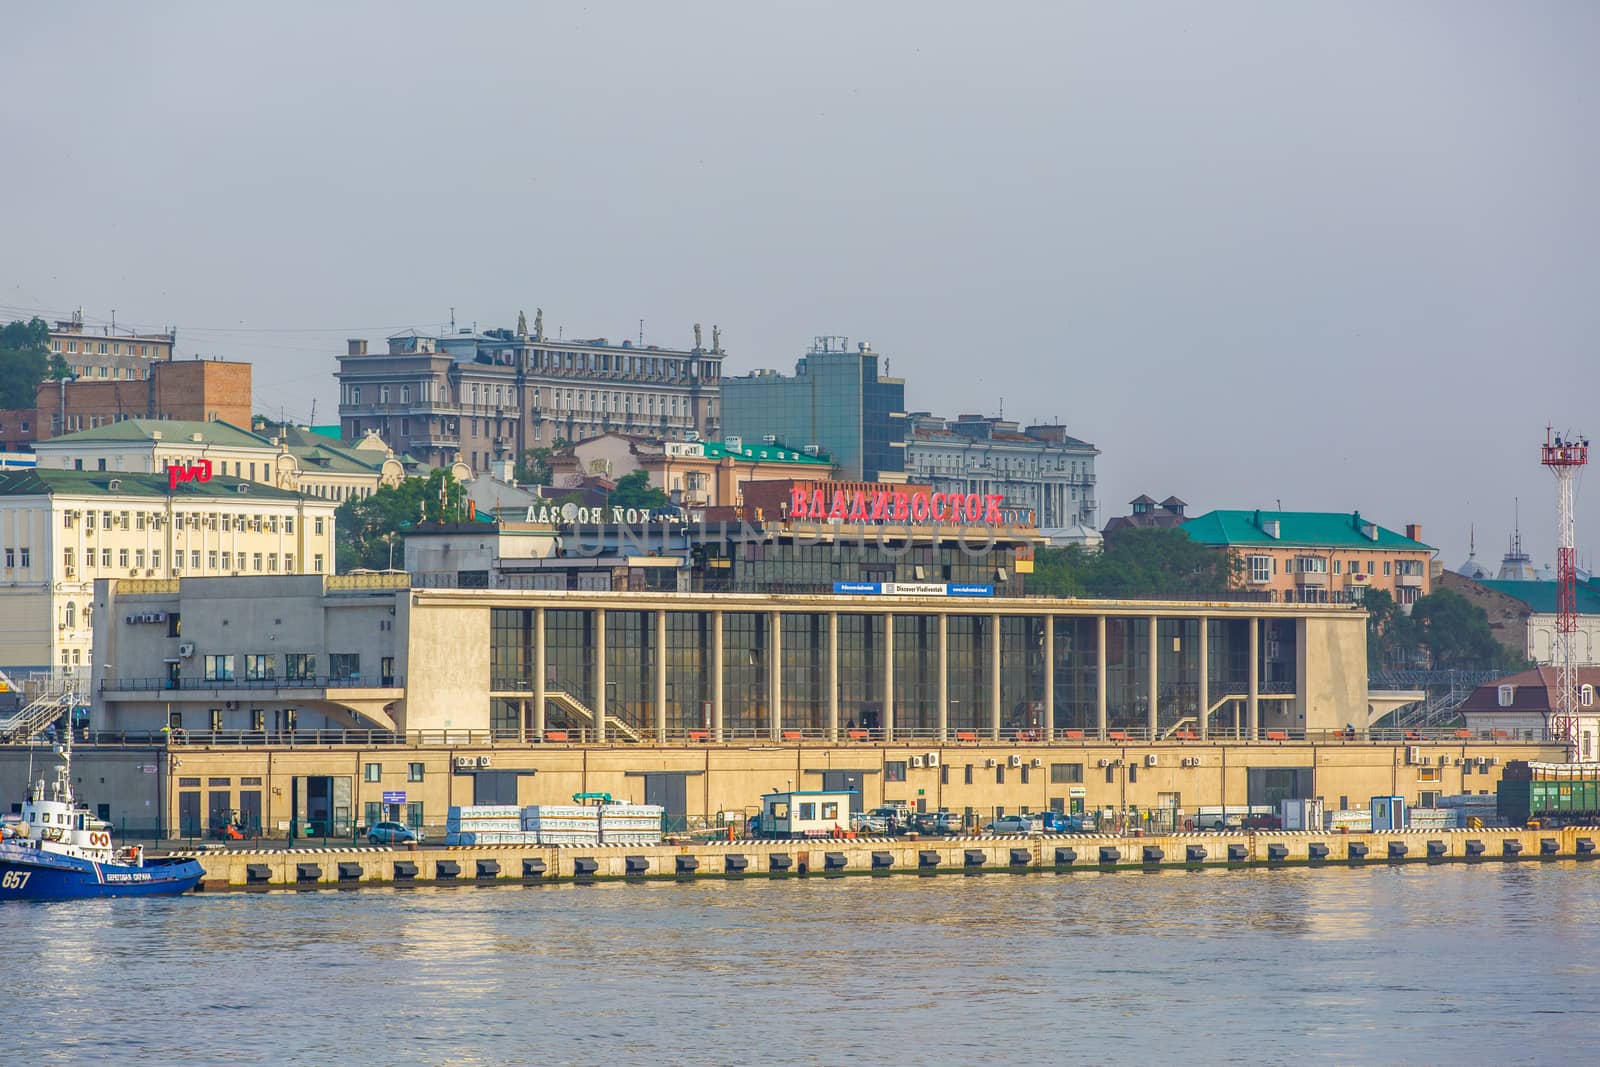 Summer, 2016 - Vladivostok, Russia - The building of the Vladivostok seaport.